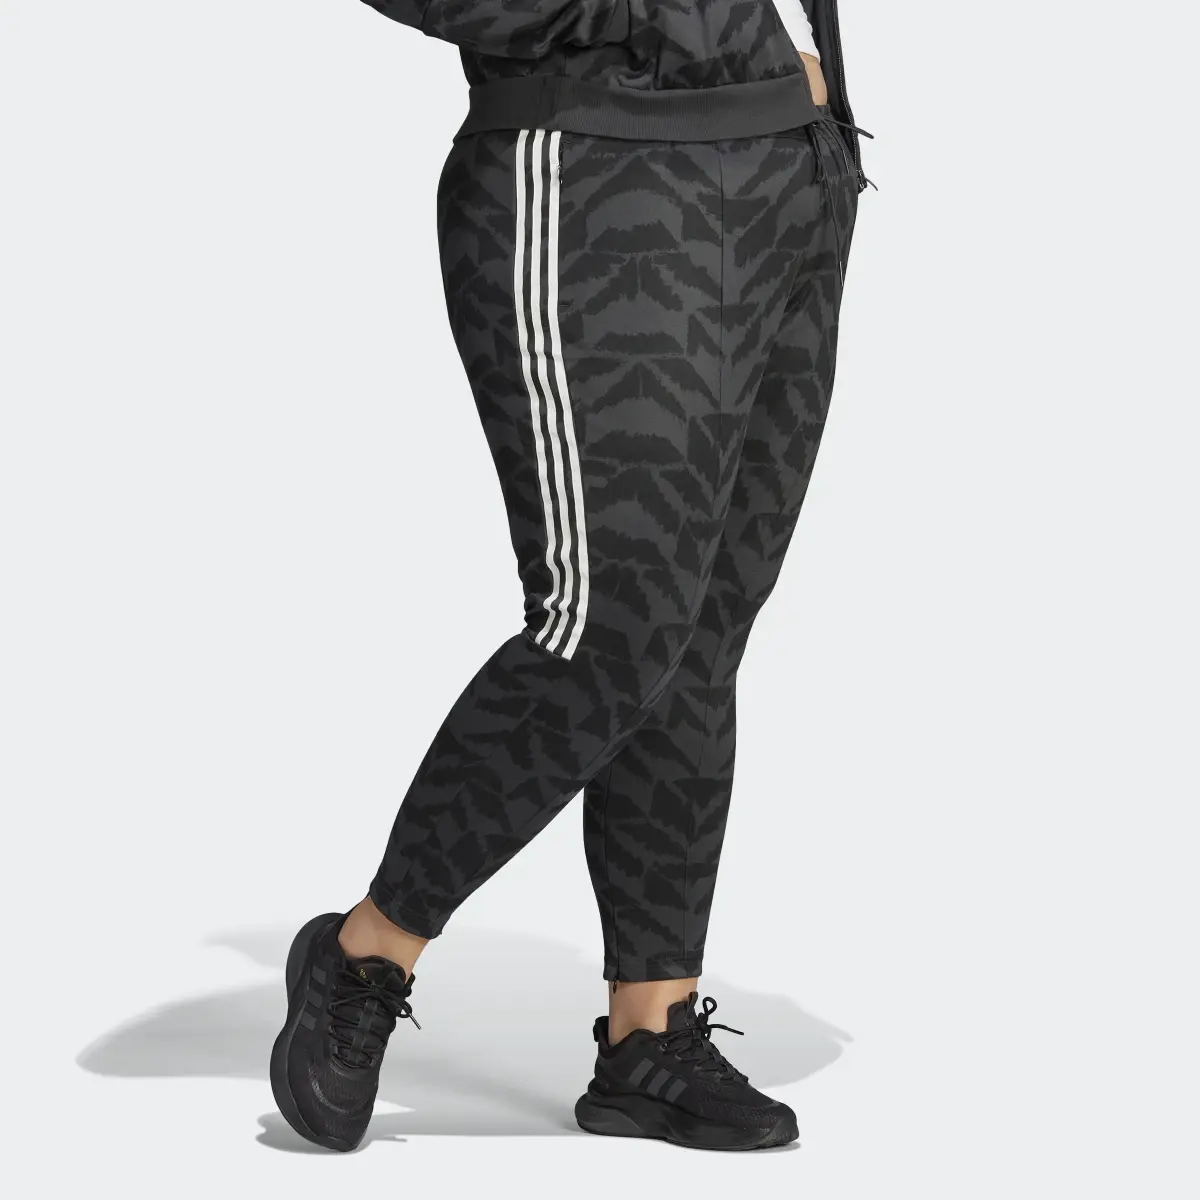 Adidas Track pants Tiro Suit Up Lifestyle (Curvy). 3